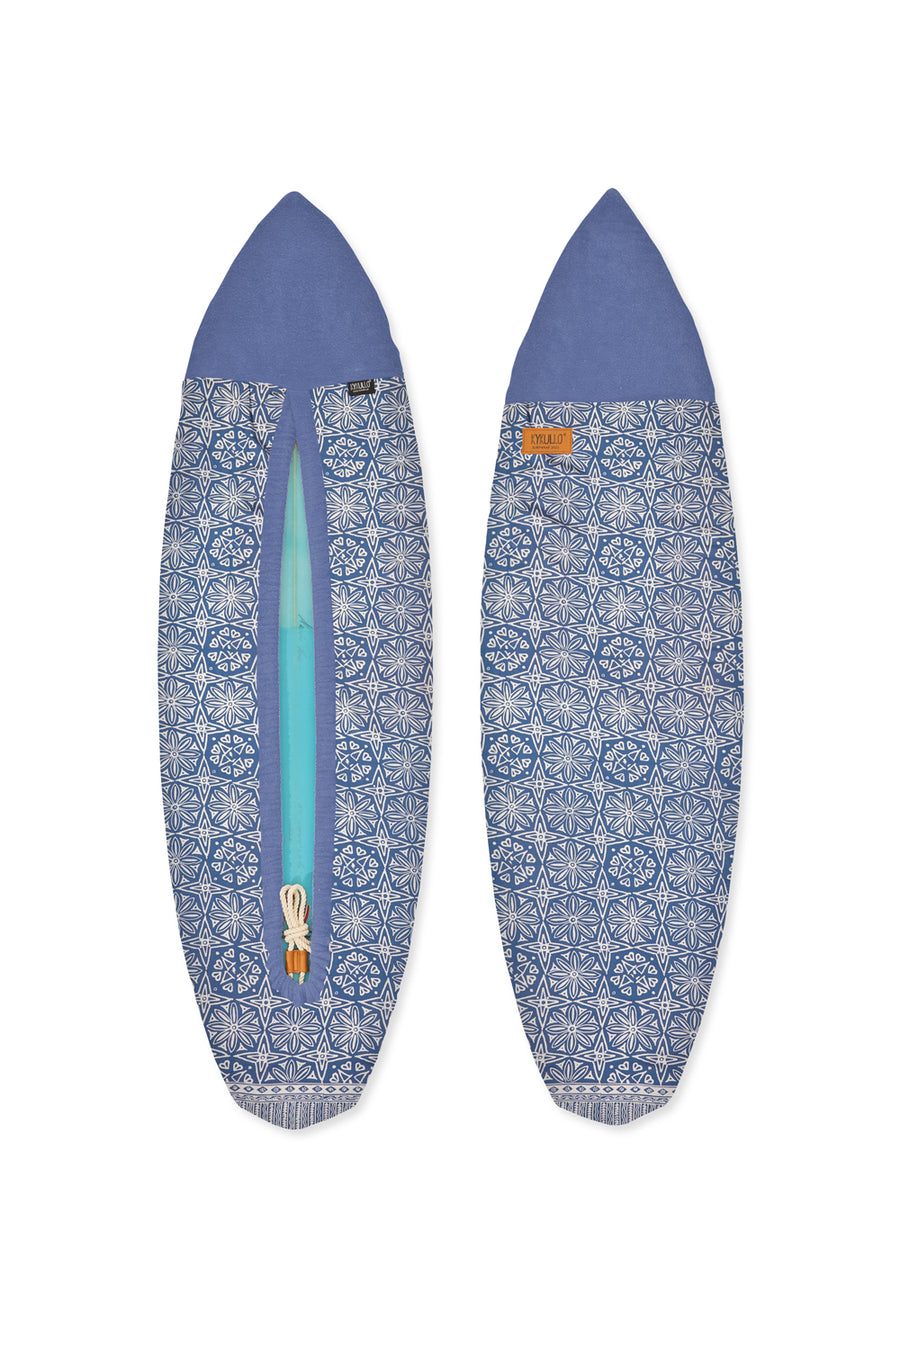 SURFWRAP 5'10 - HORIZON (RETAIL)